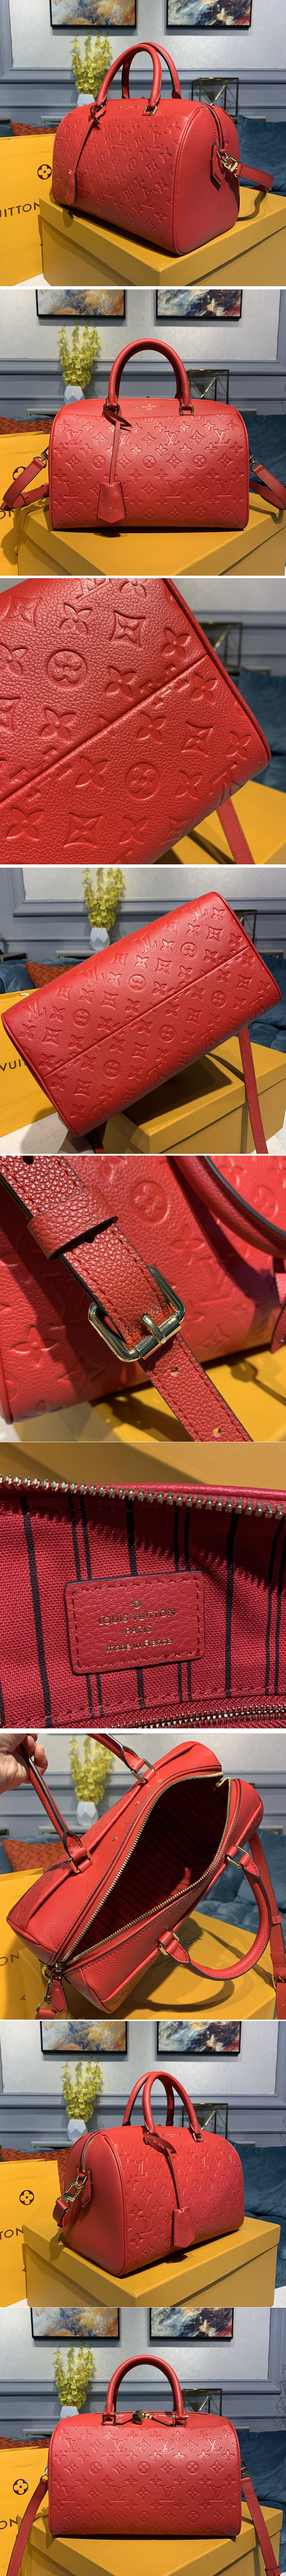 Replica Louis Vuitton M42406 Speedy Bandouliere 30 handbag in Red Monogram Empreinte leather